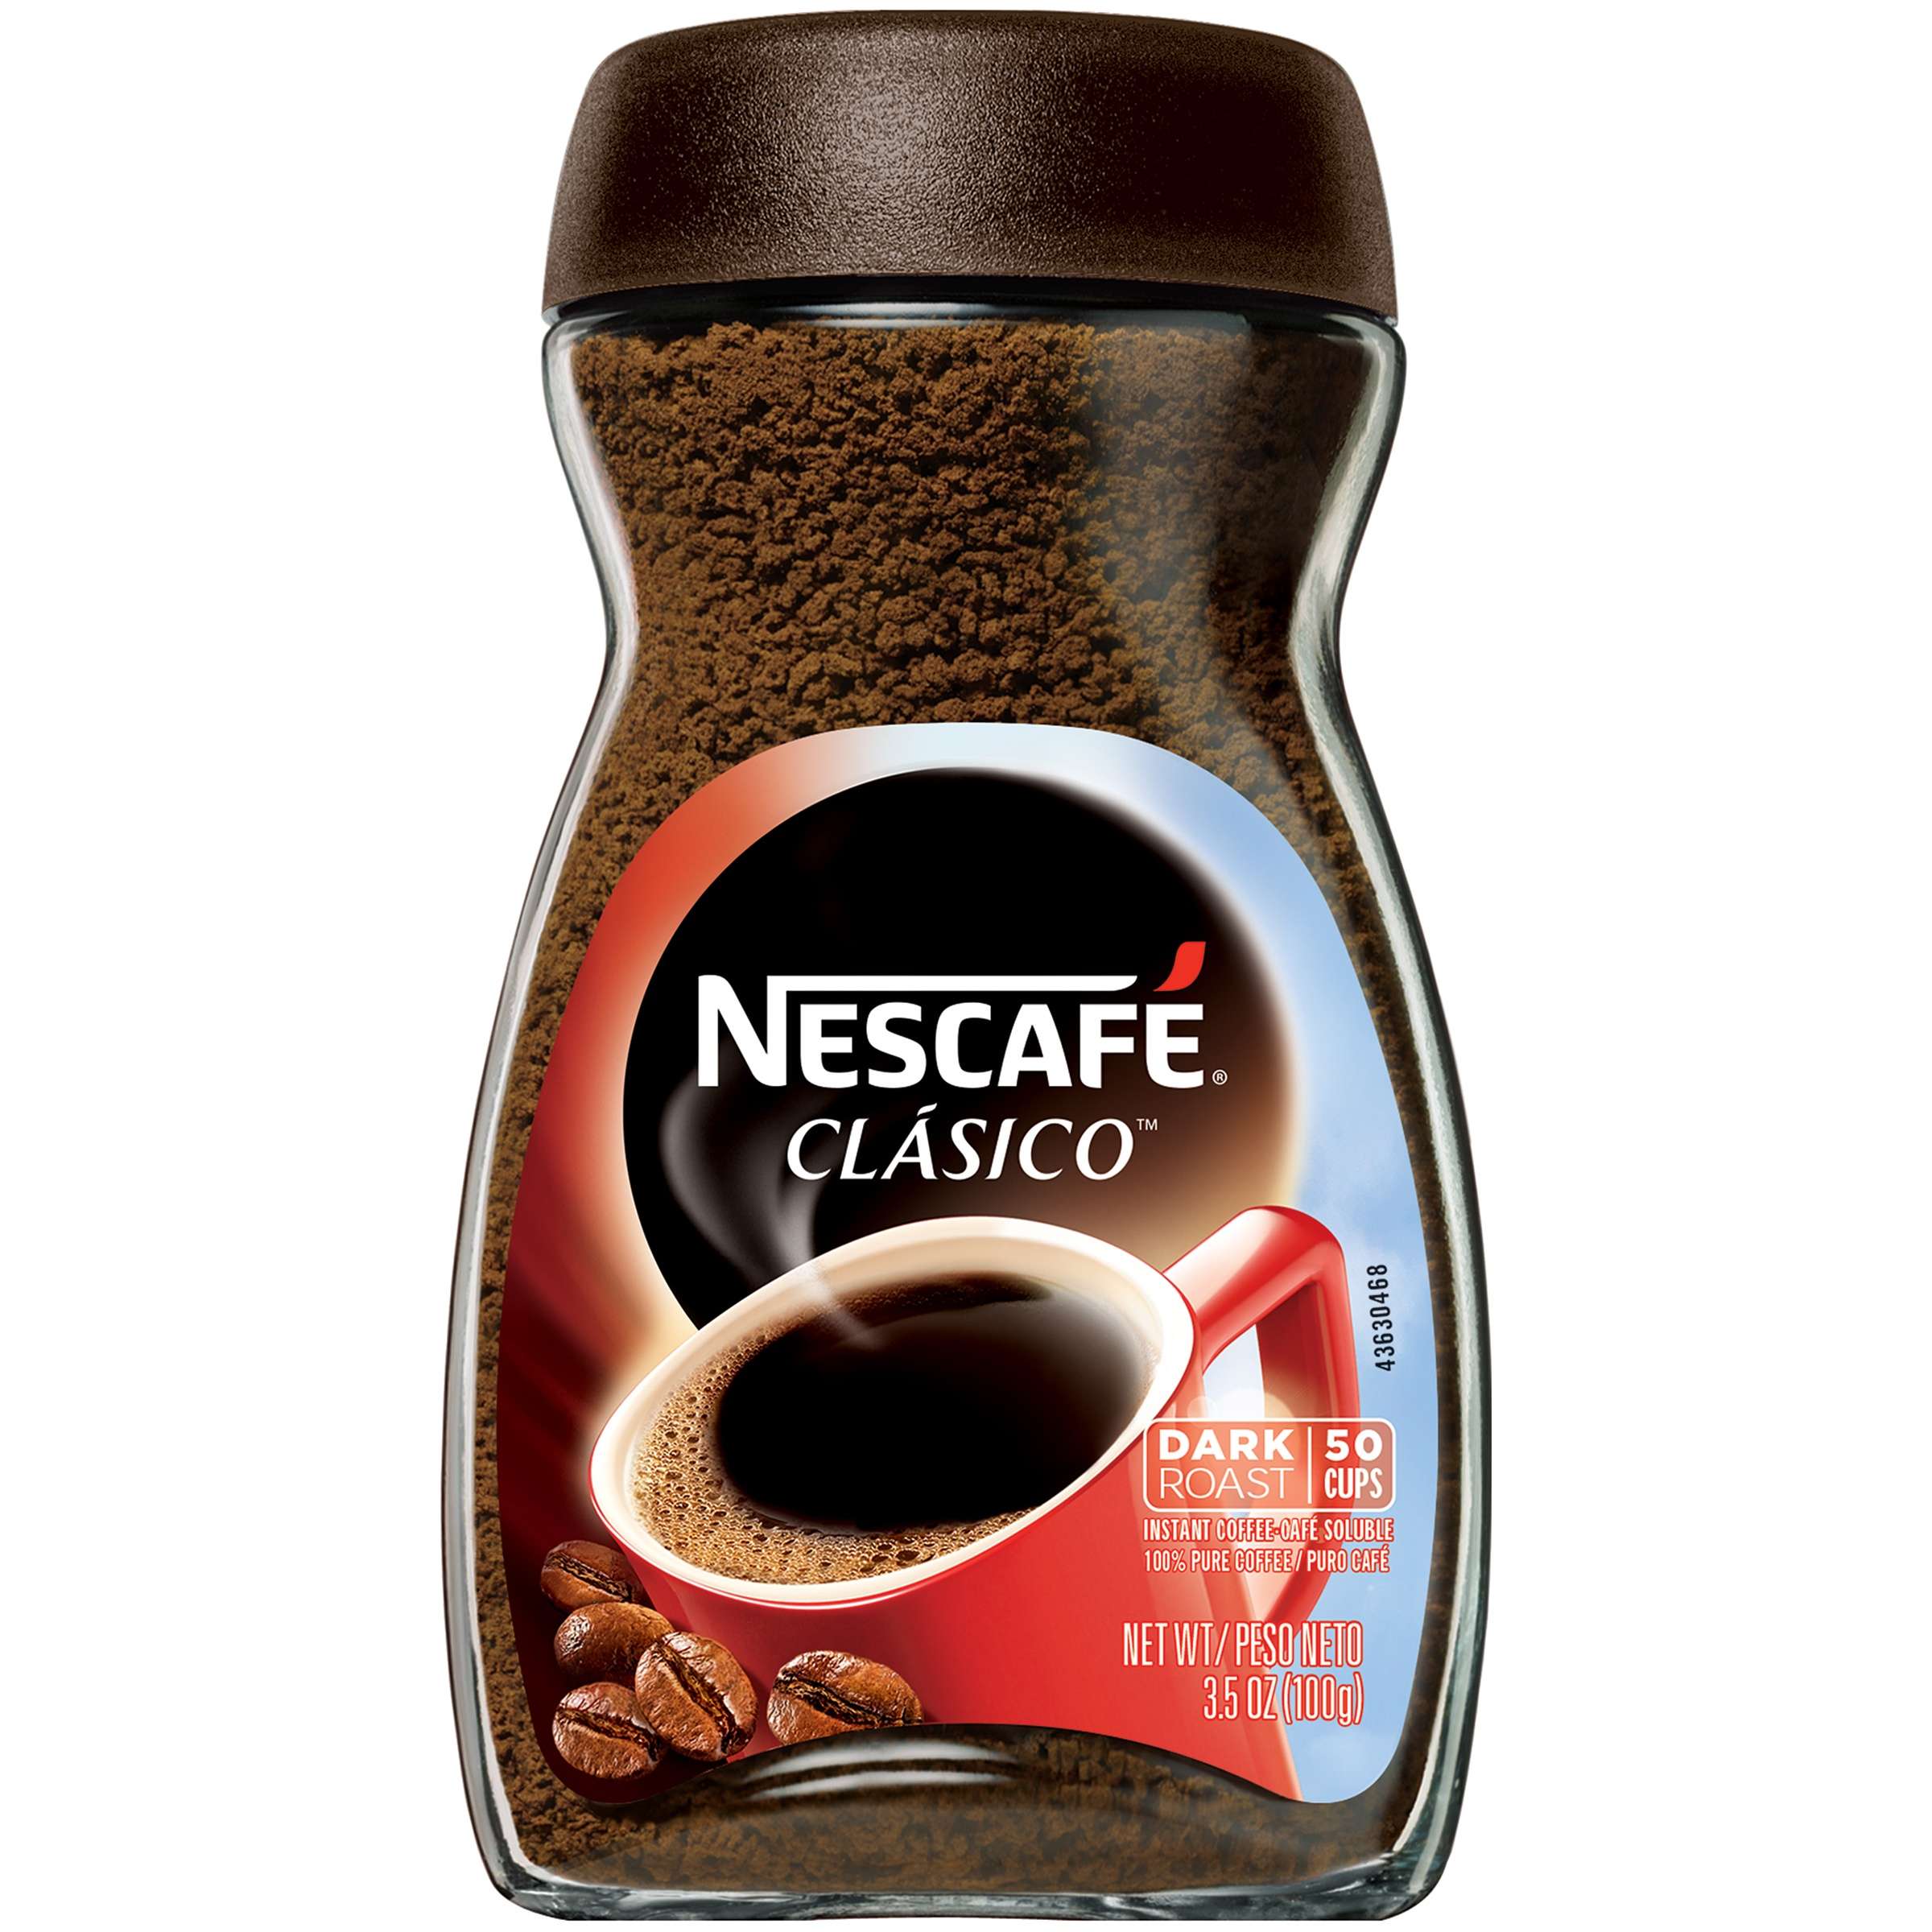 NESCAFE CLASICO Instant Coffee 6